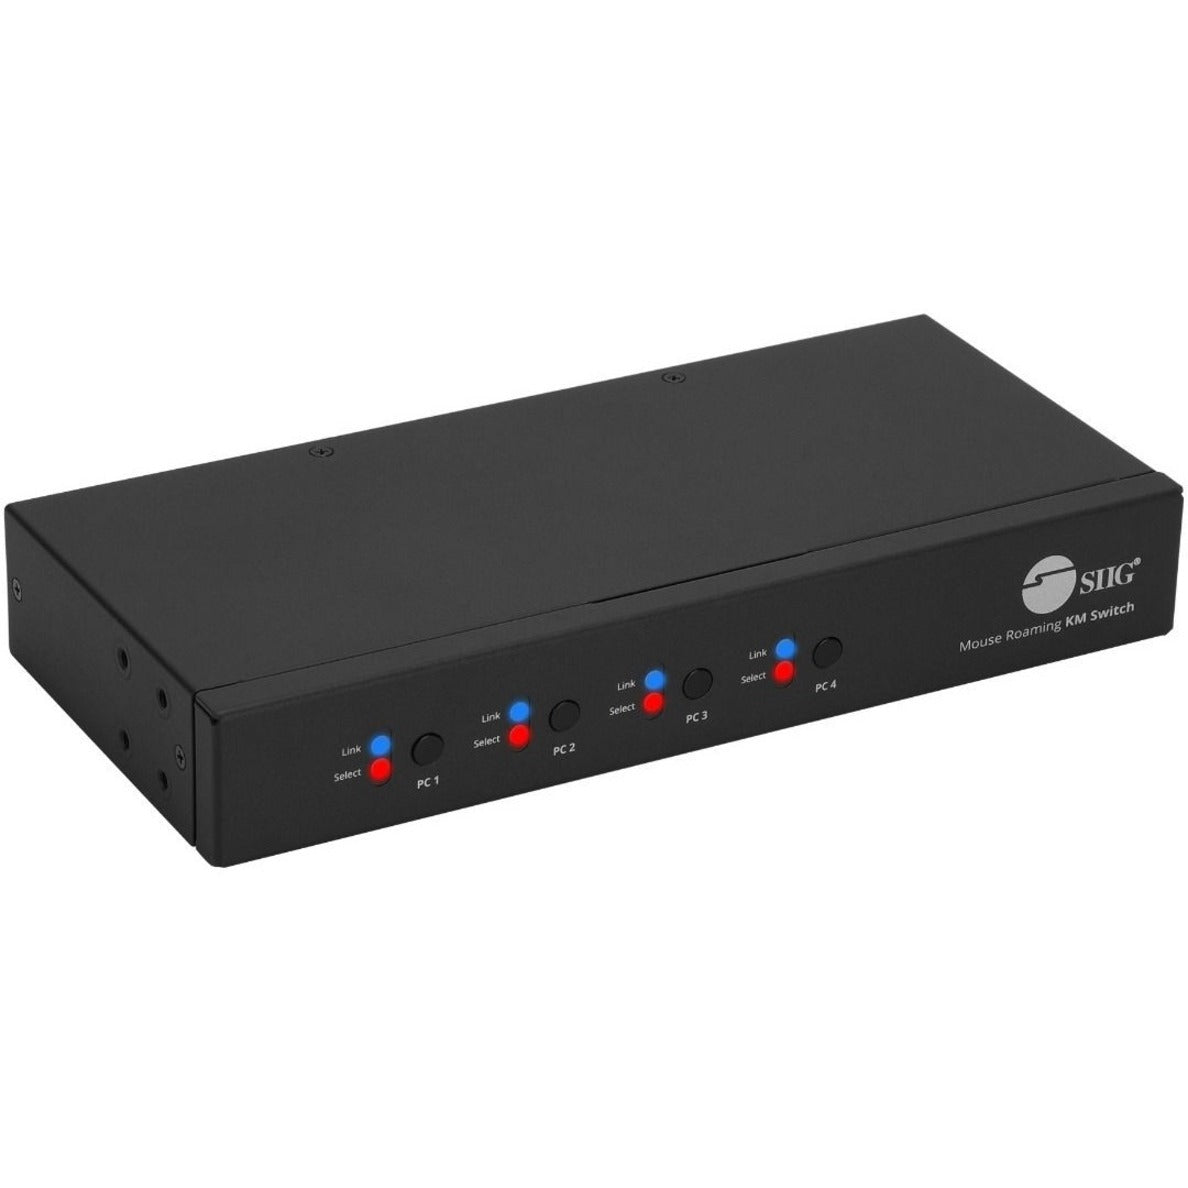 SIIG JU-SW4311-S1 4-Port Roaming KM Switch with USB 2.0 Hub, Plug and Play, TAA Compliant